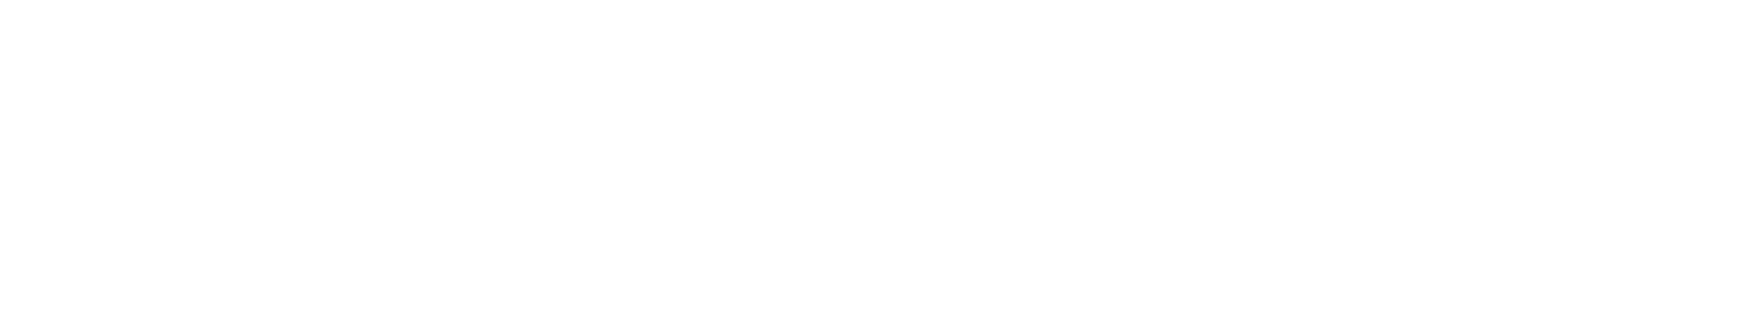 Alliant International University | California School of Professional Psychology